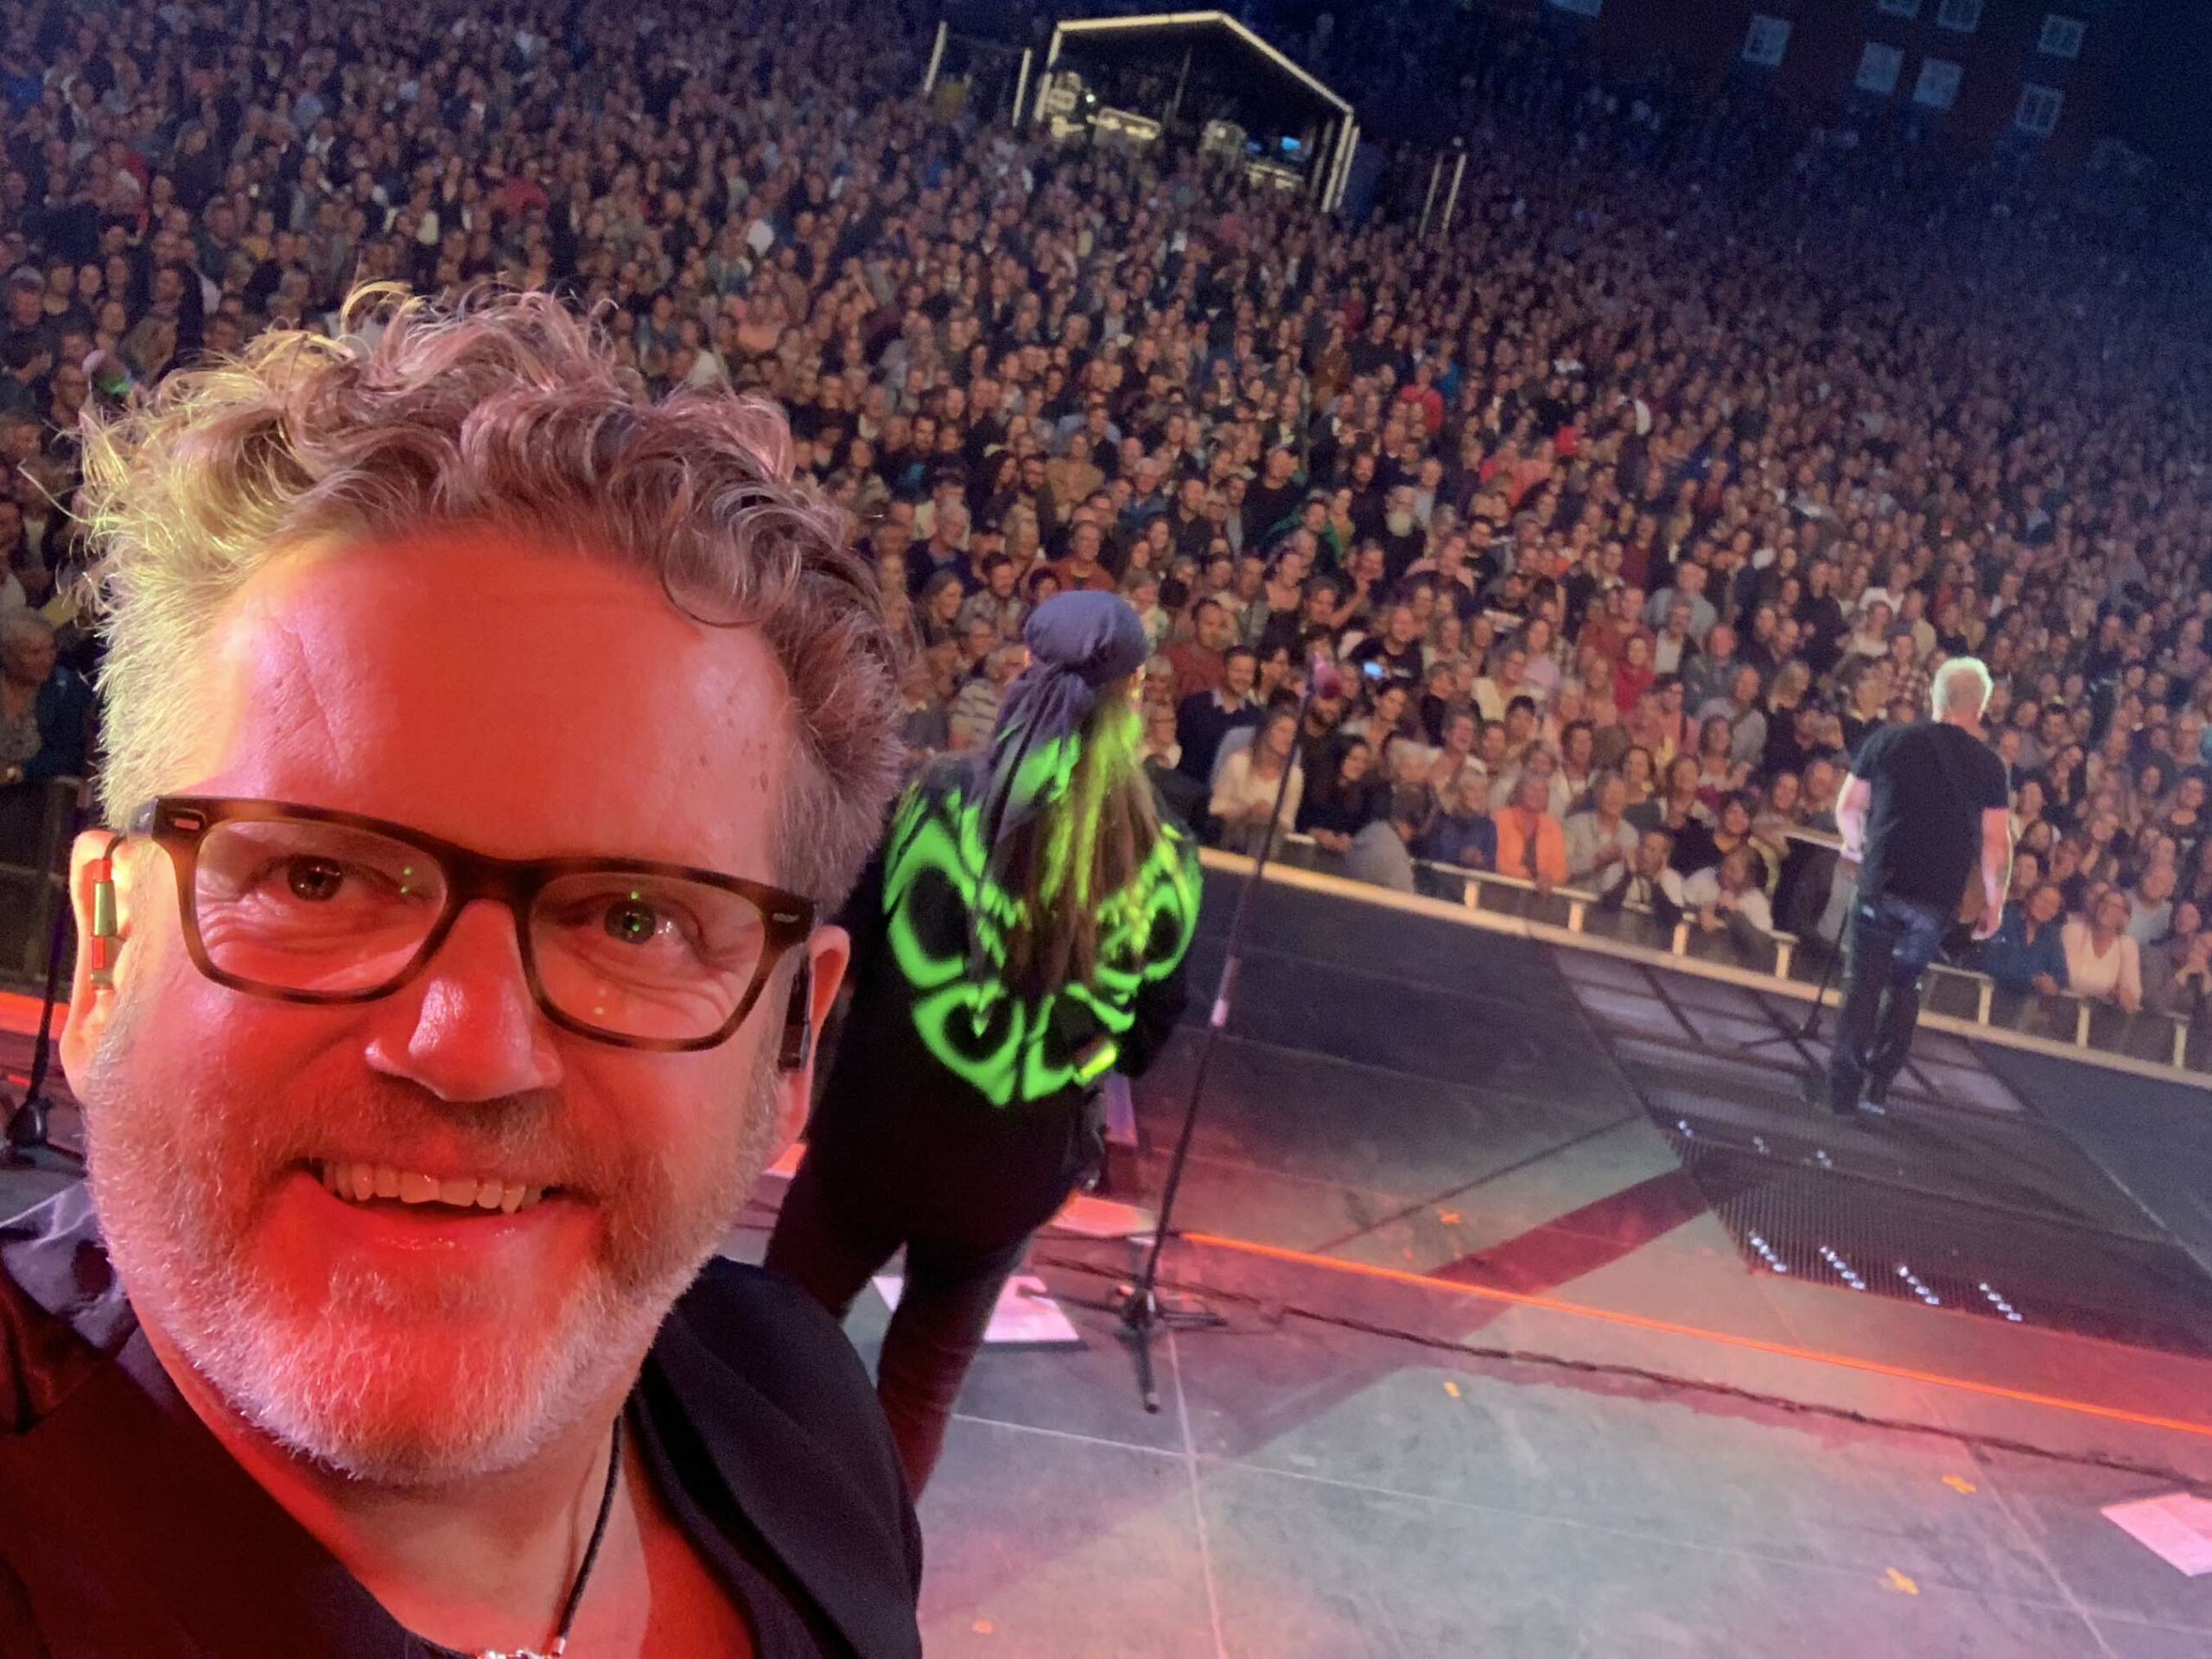 Mann med briller tar selfie på scenen foran stort publikum